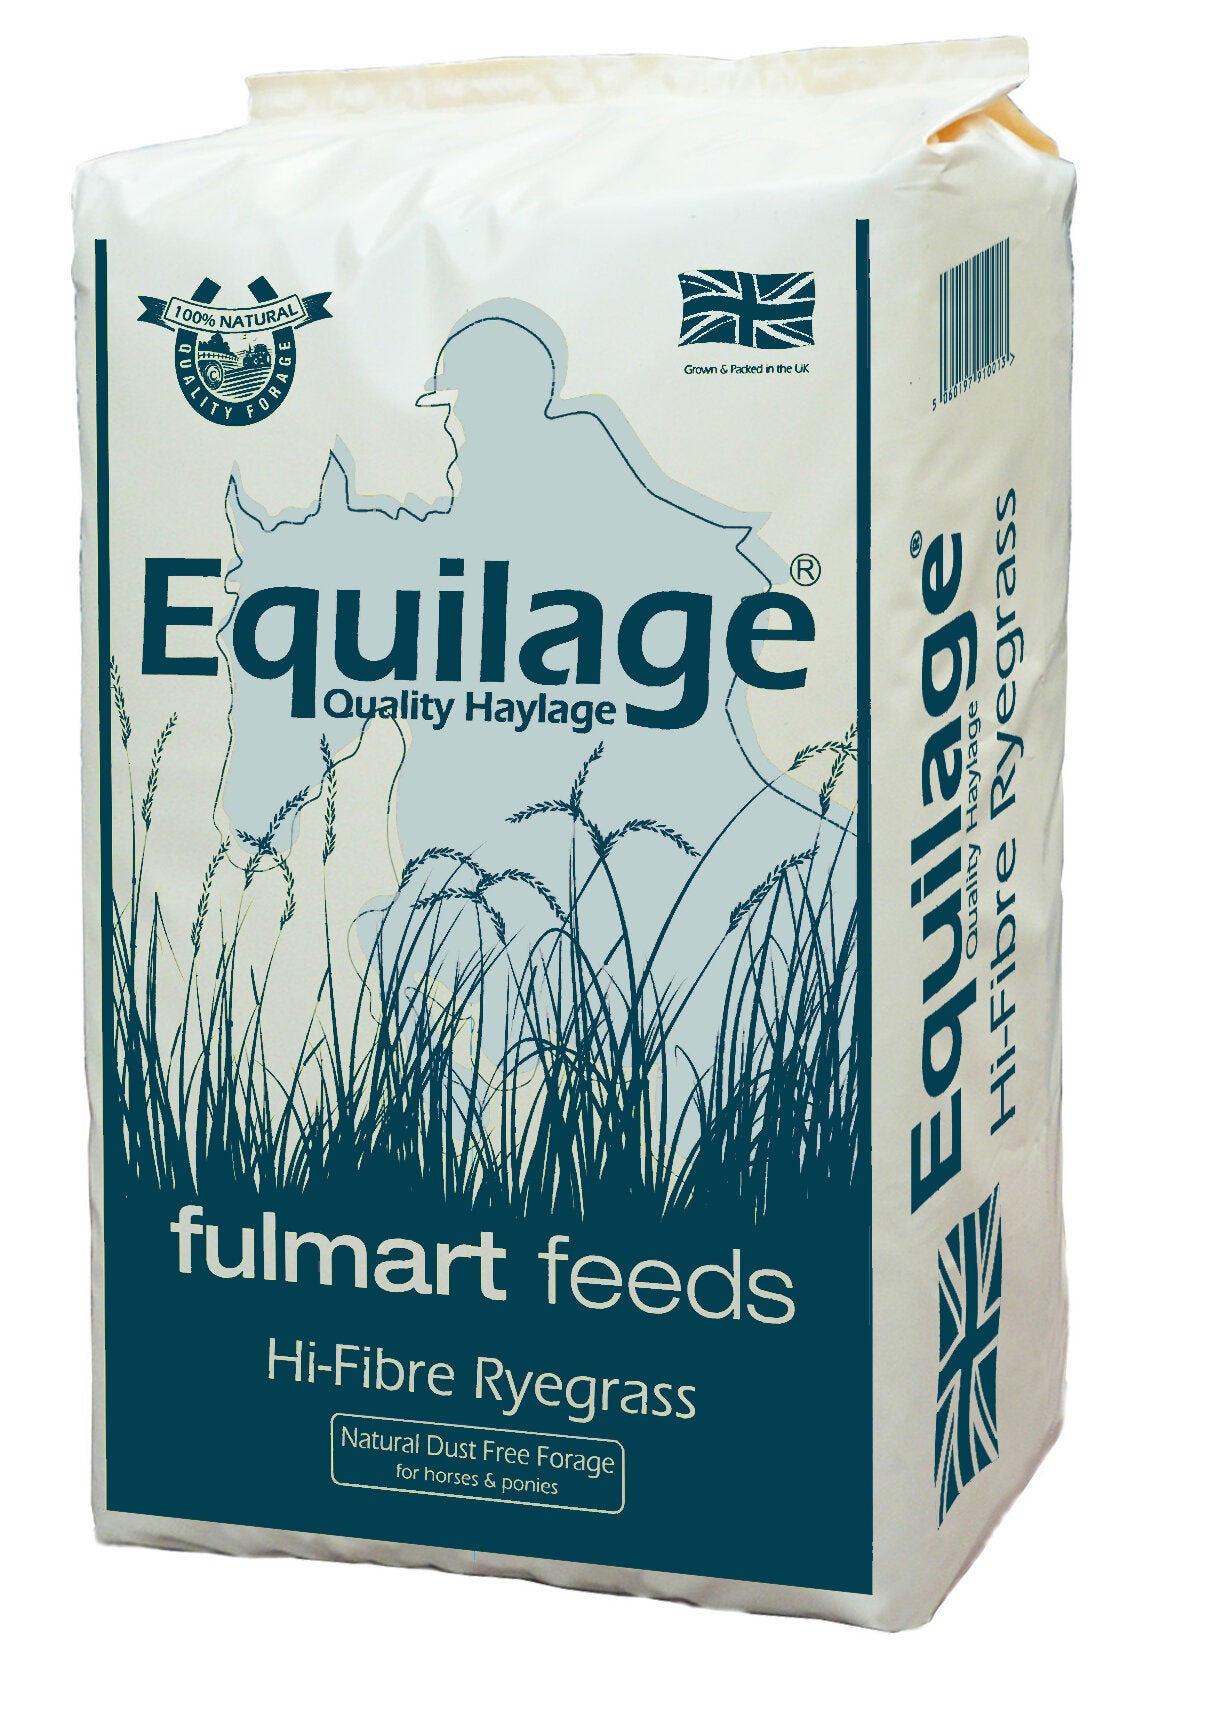 Equilage Hi-Fibre Ryegrass